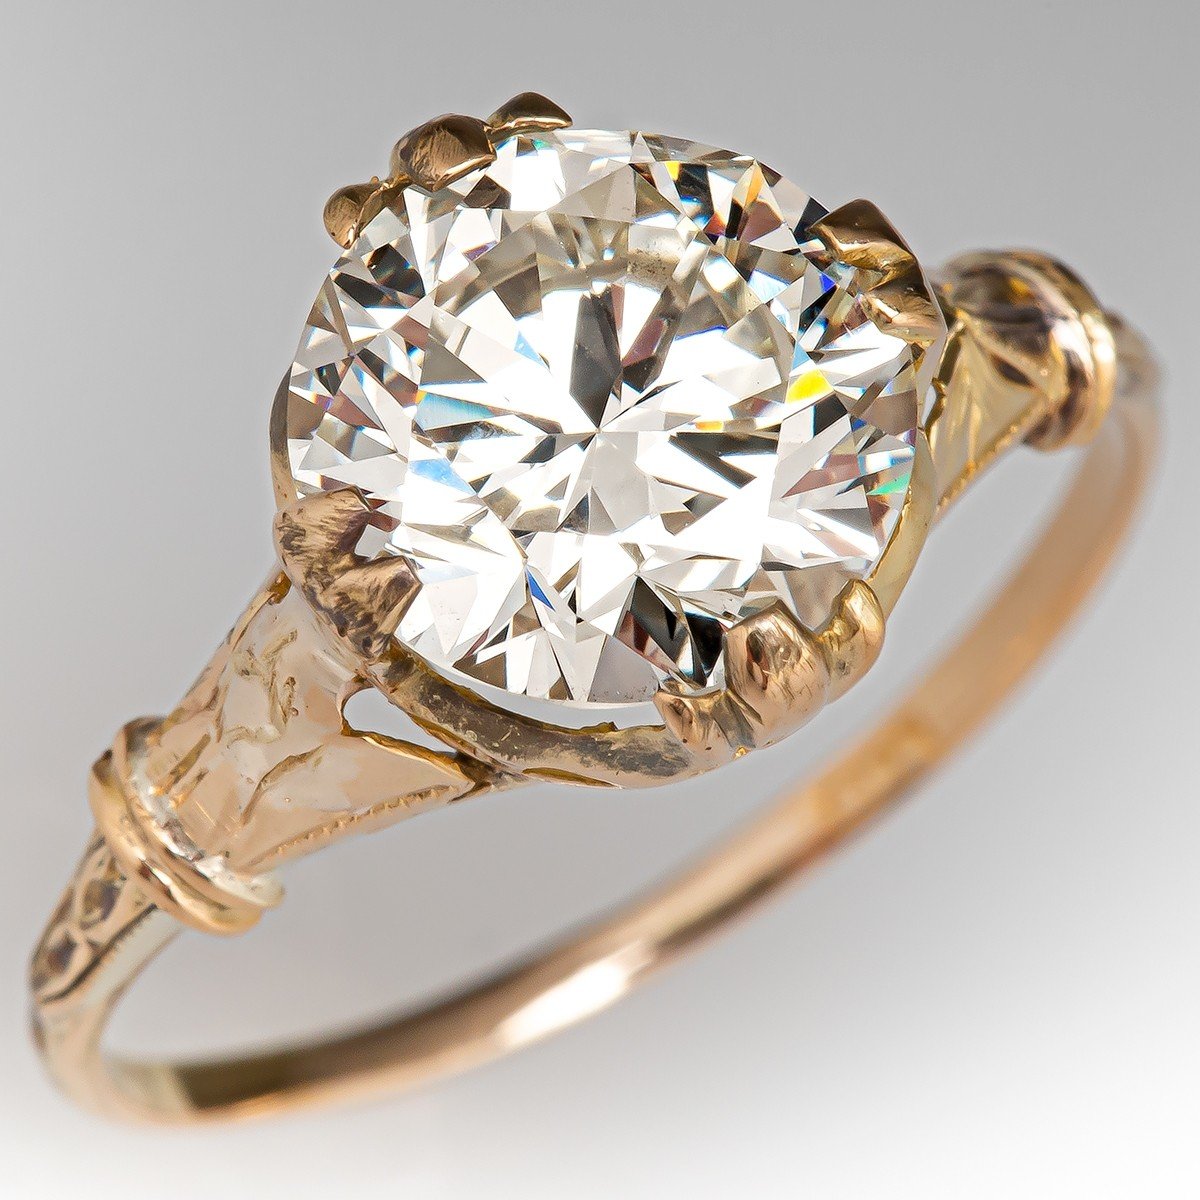 Vintage  Vintage 14k Yellow Gold Diamond Ring with 18k White